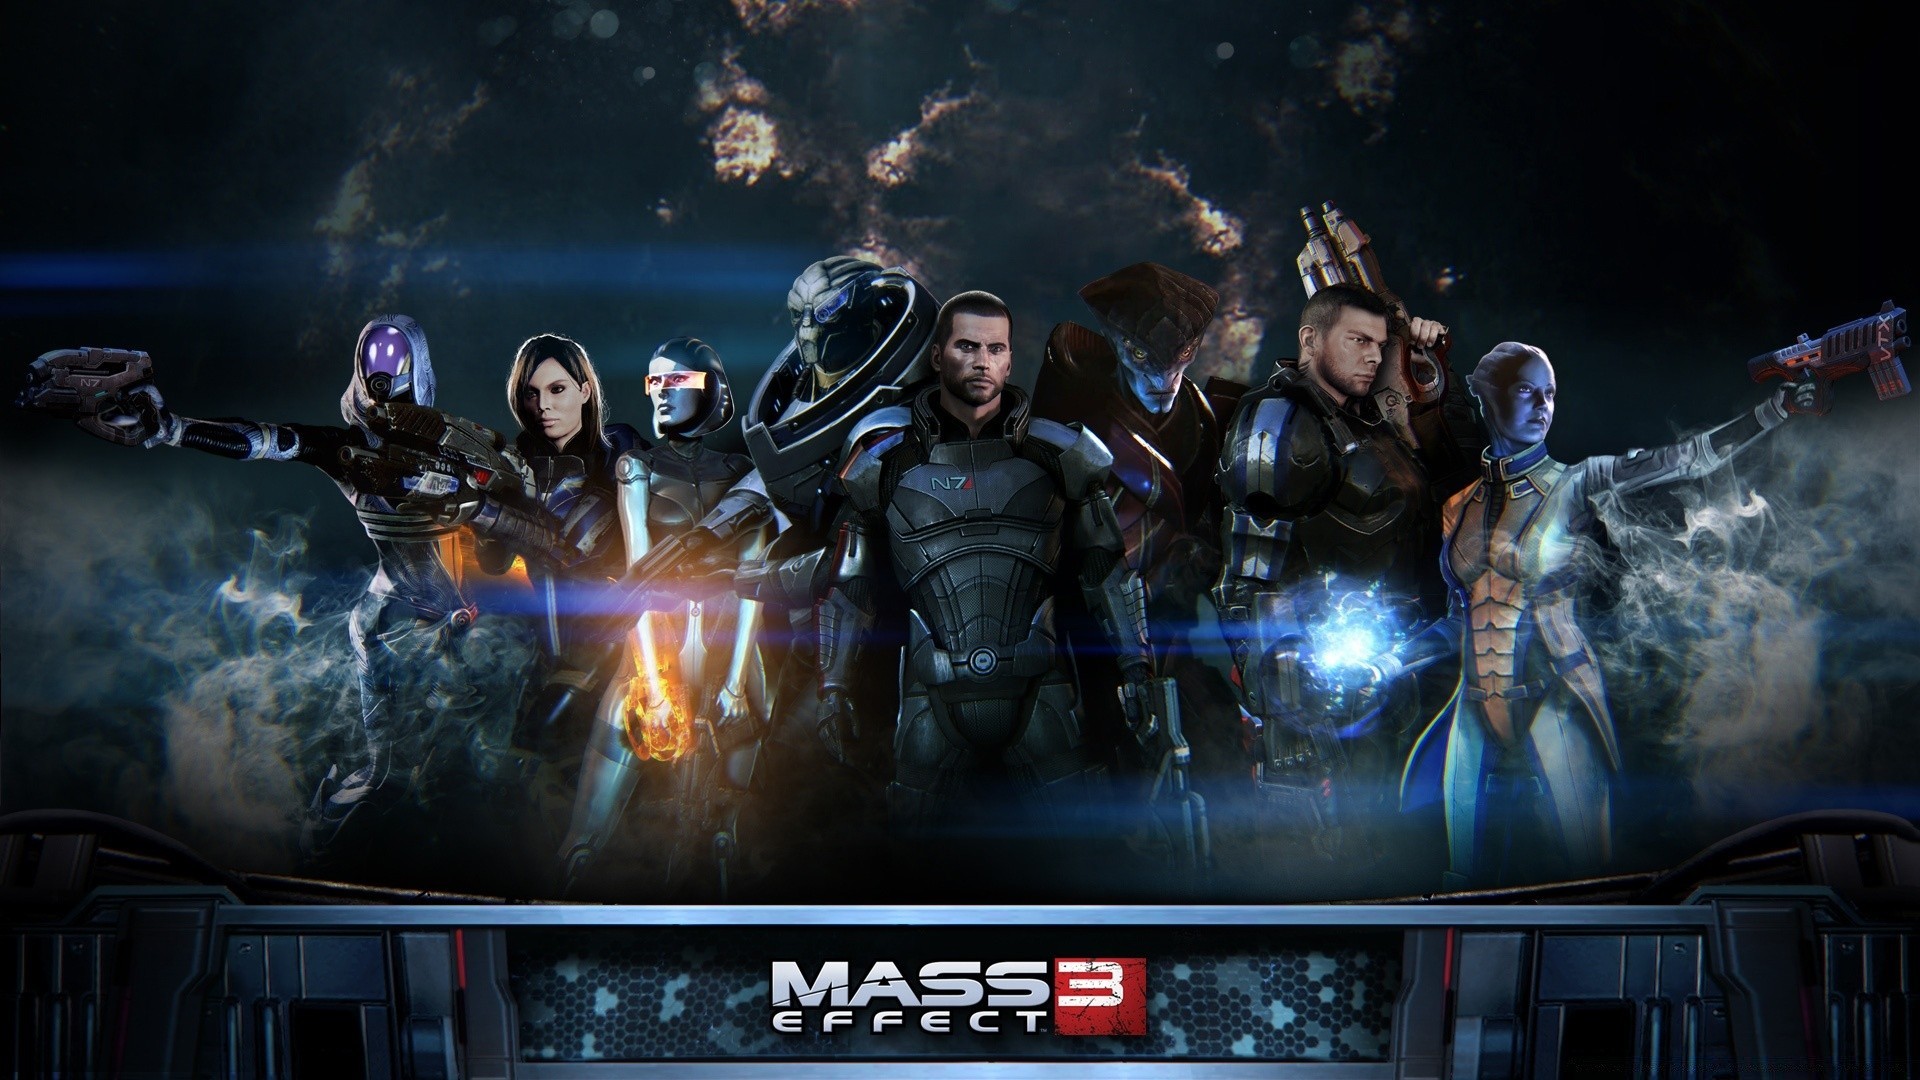 Mass Effect Music Ball-shaped Performance Festival - Mass Effect Wallpaper 4k - HD Wallpaper 